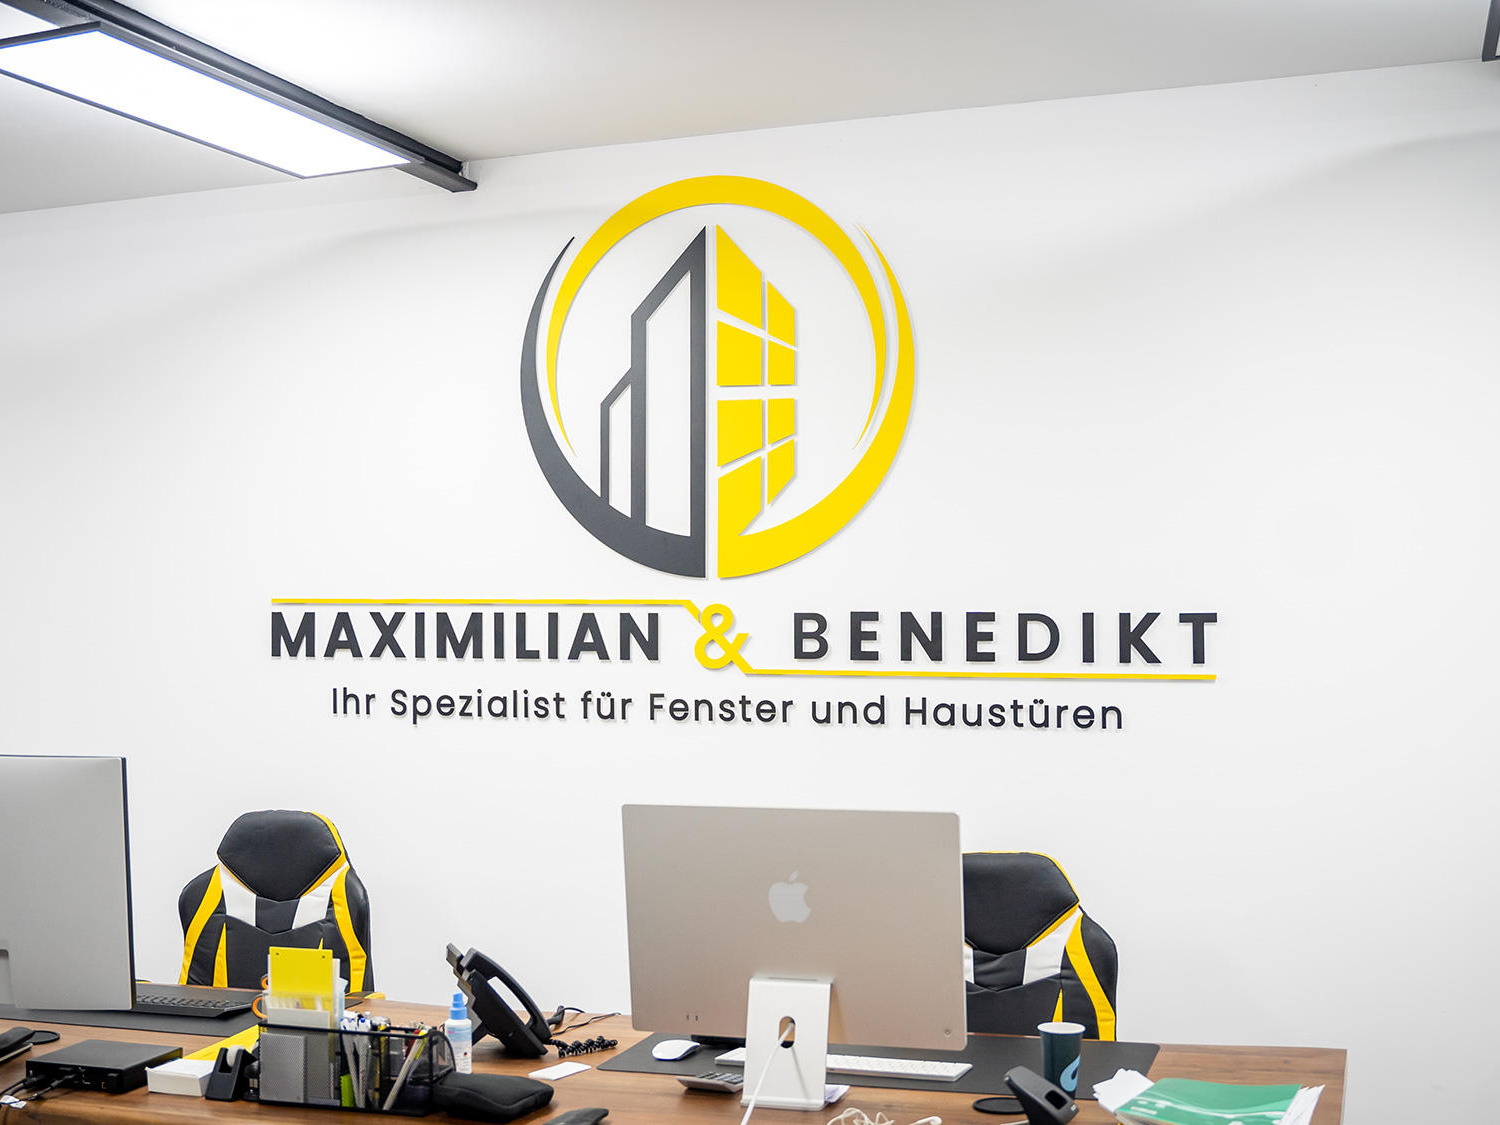 Maximilian & Benedikt GmbH, Hermülheimer Straße 3a in Brühl